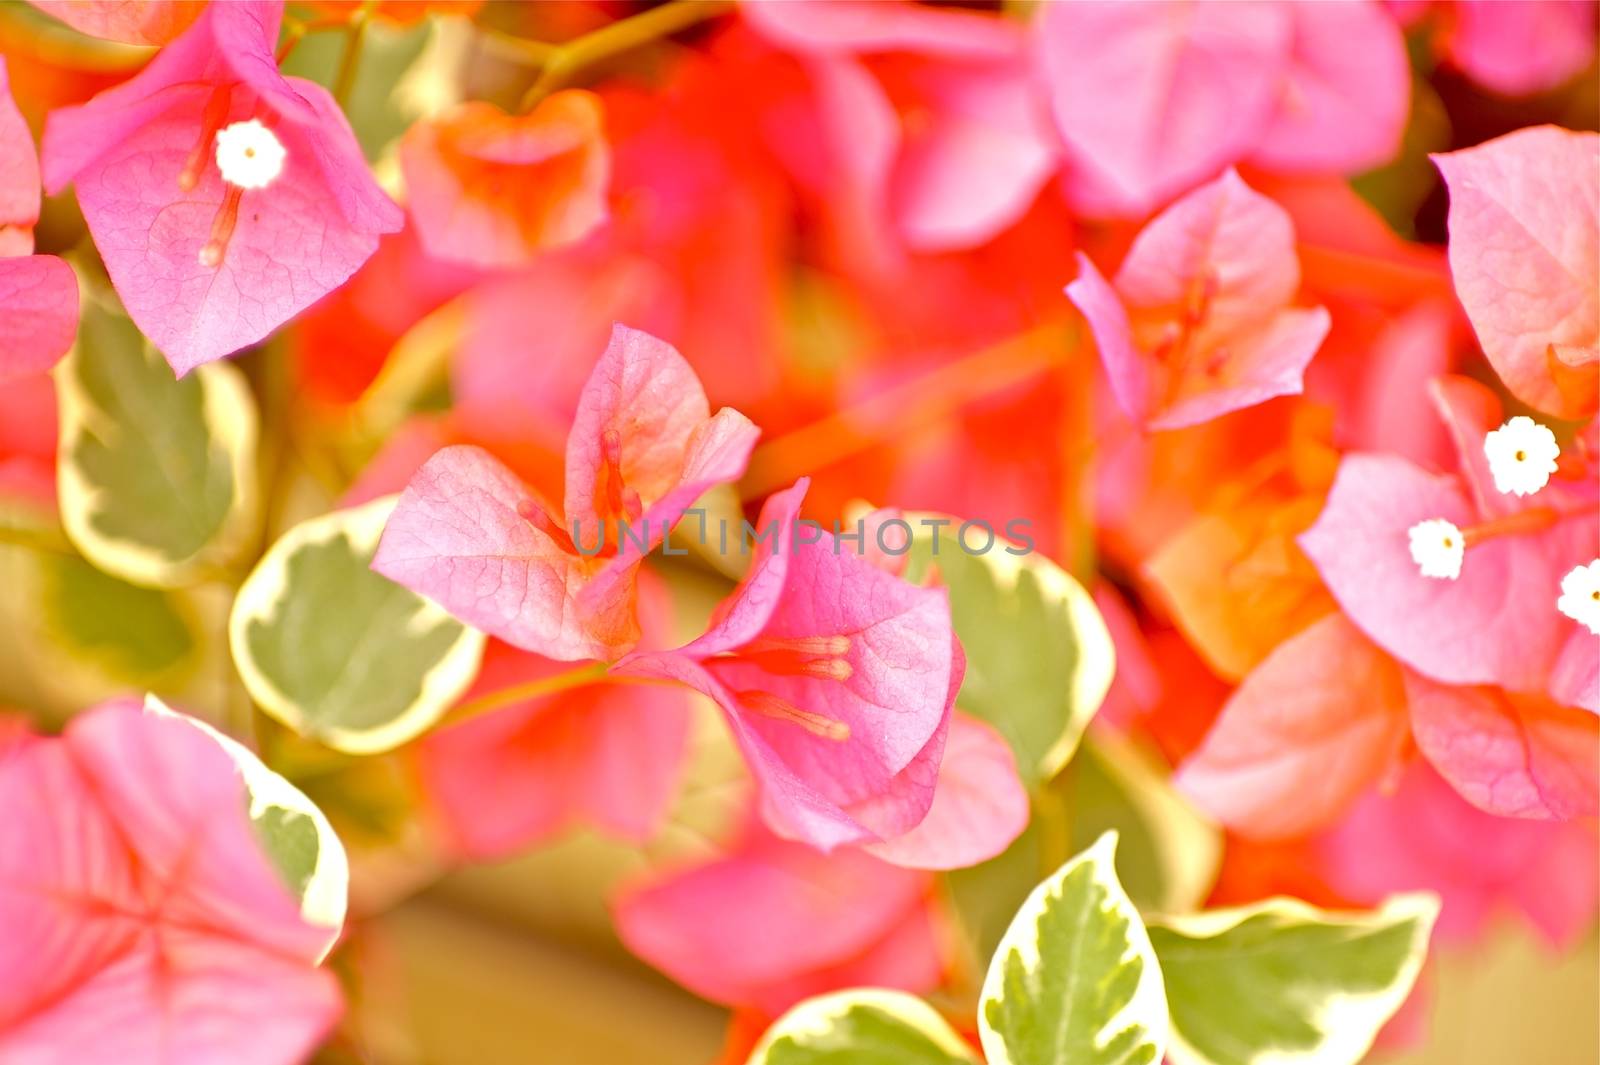 Pinky Plants -Flowers Horizontal Photography.